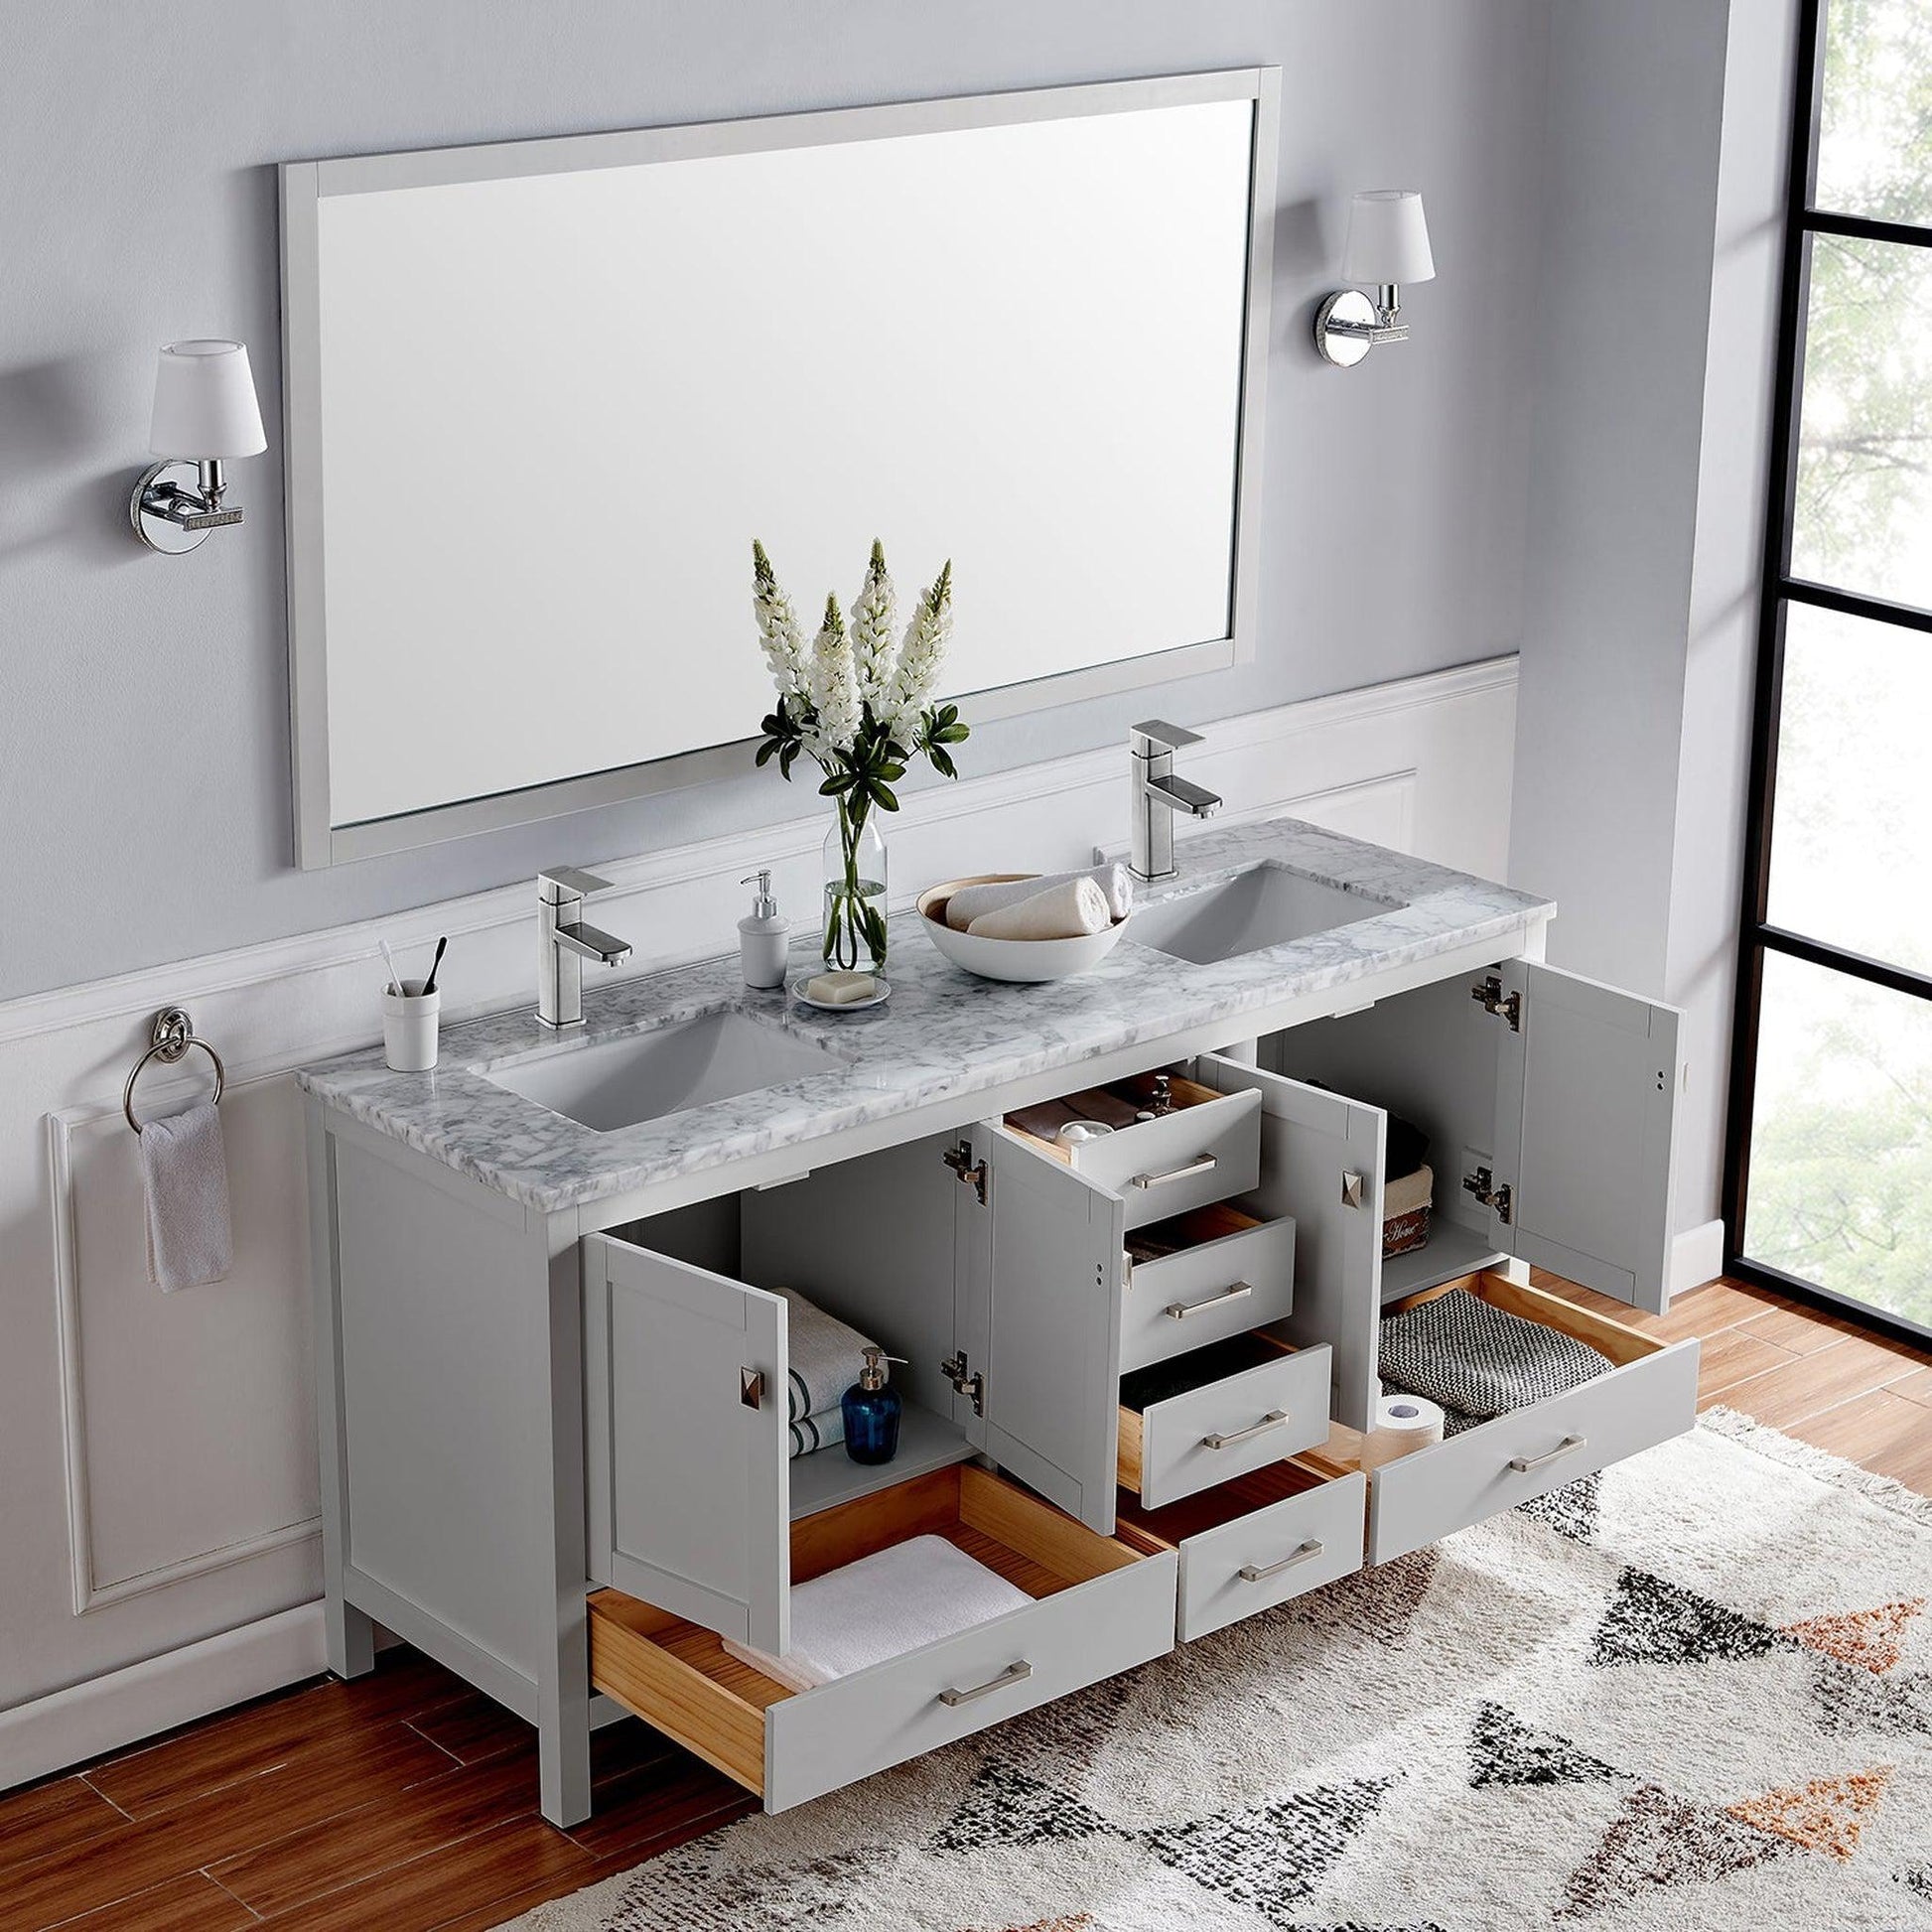 Eviva London 60" x 34" Gray Freestanding Bathroom Vanity With Carrara Marble Countertop and Double Undermount Sink